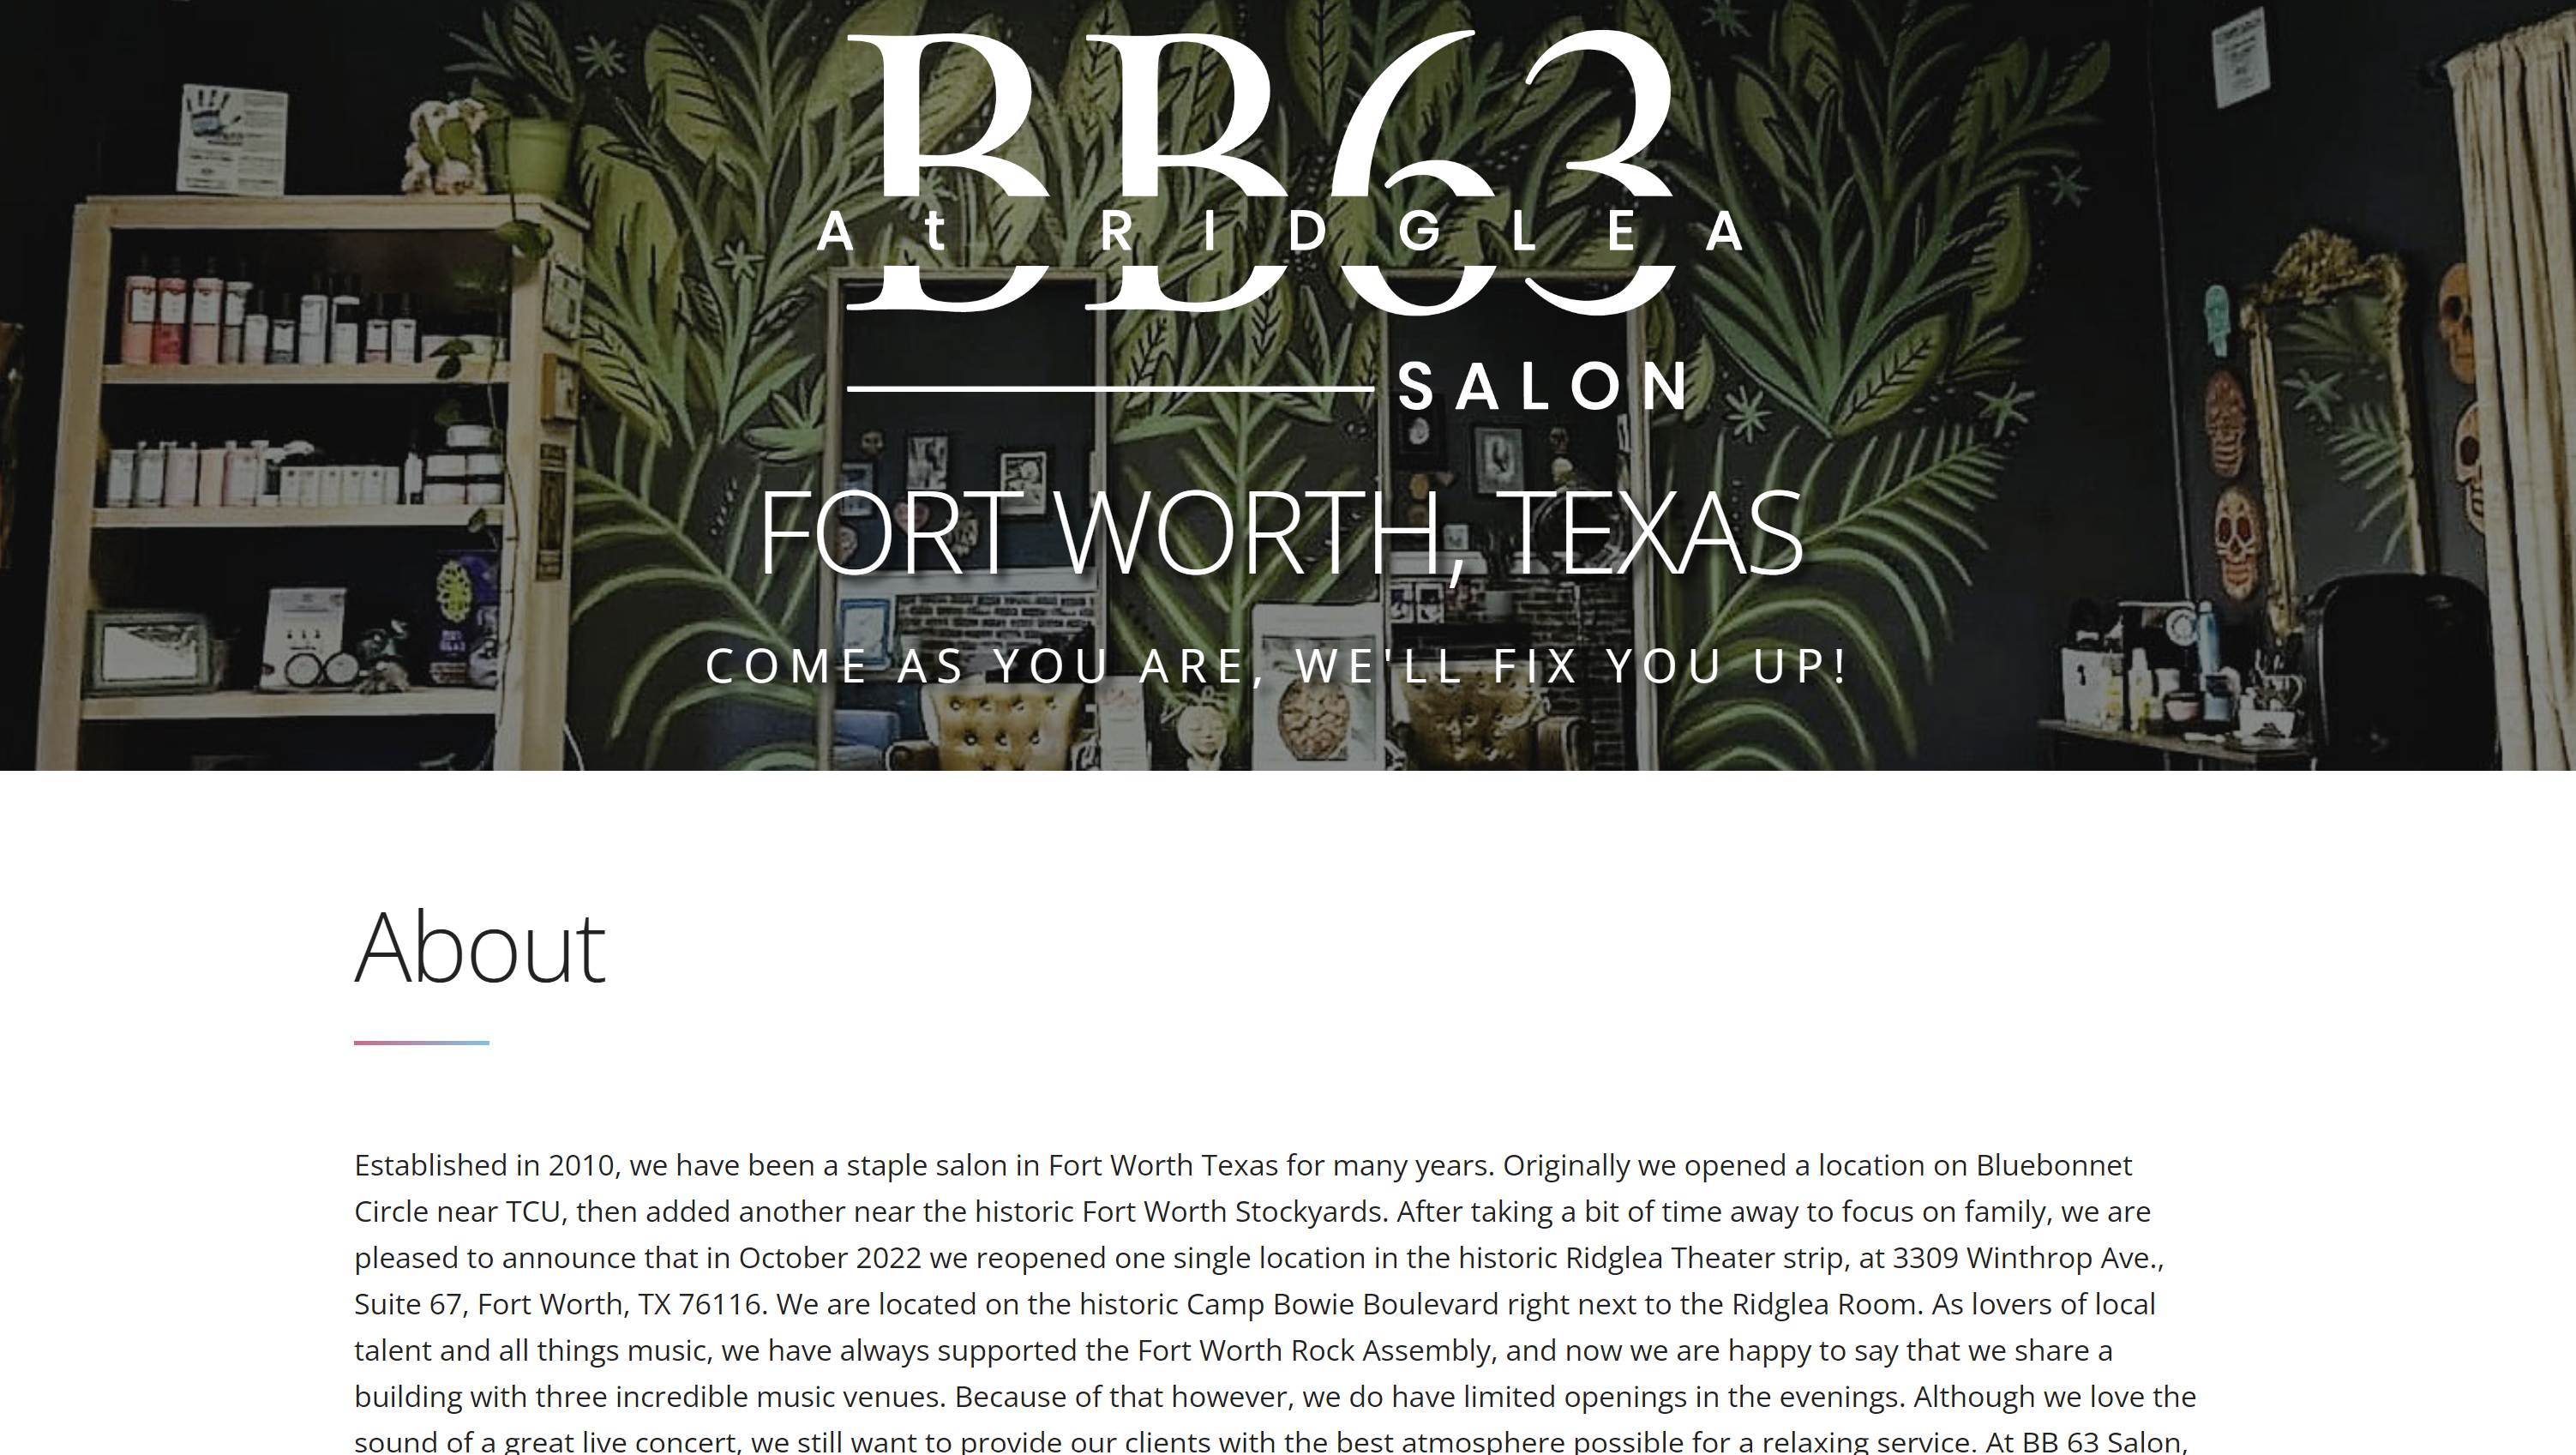 BB63 Salon Website